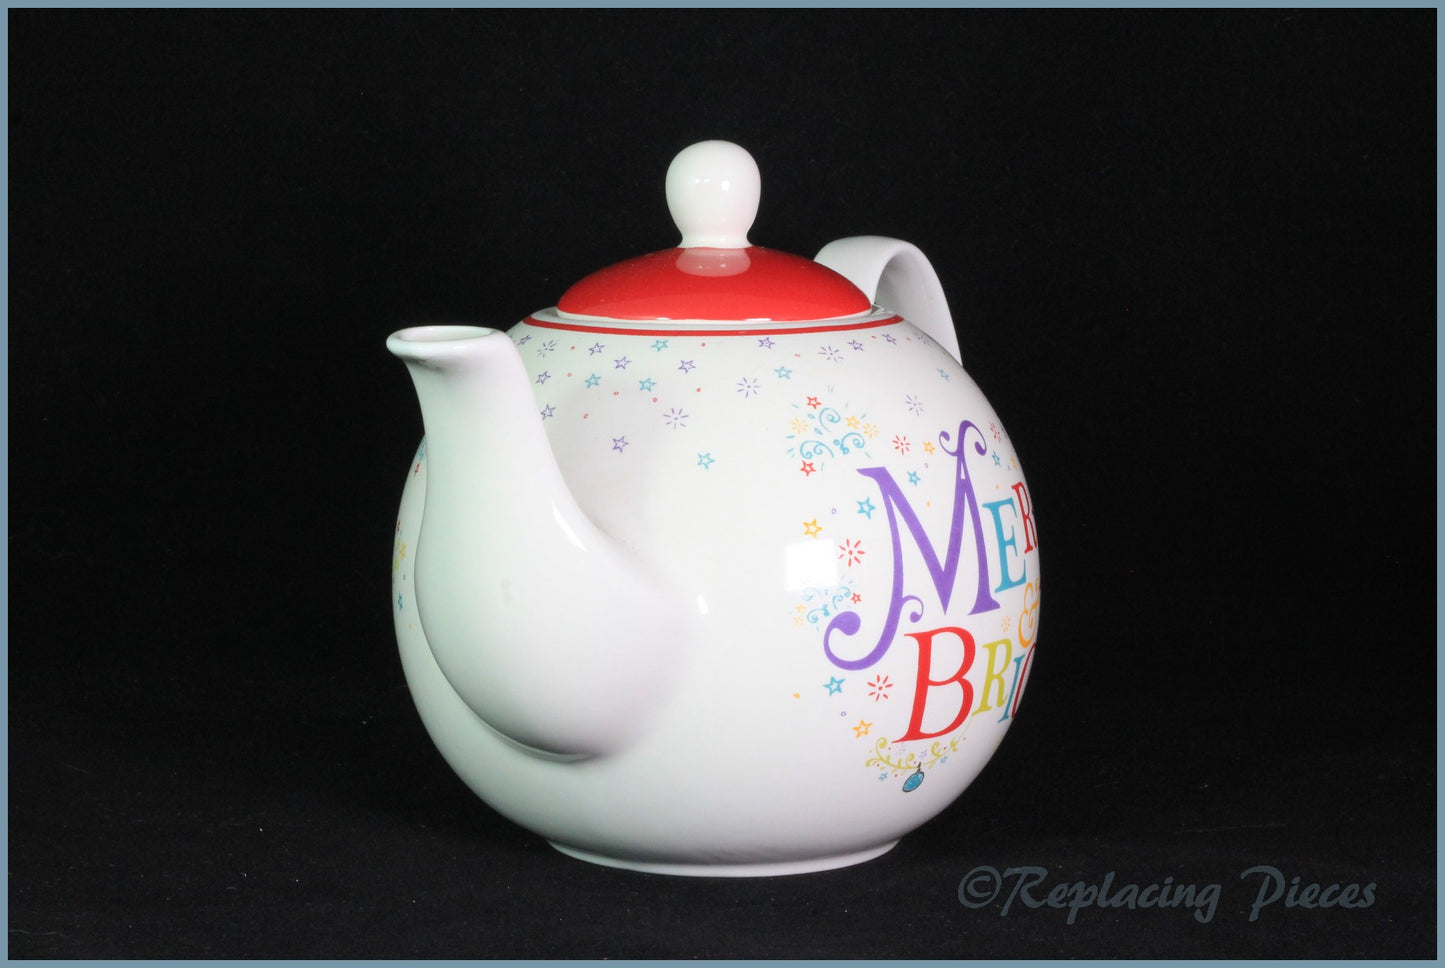 RPW52 - Whittards - Teapot (Merry & Bright)